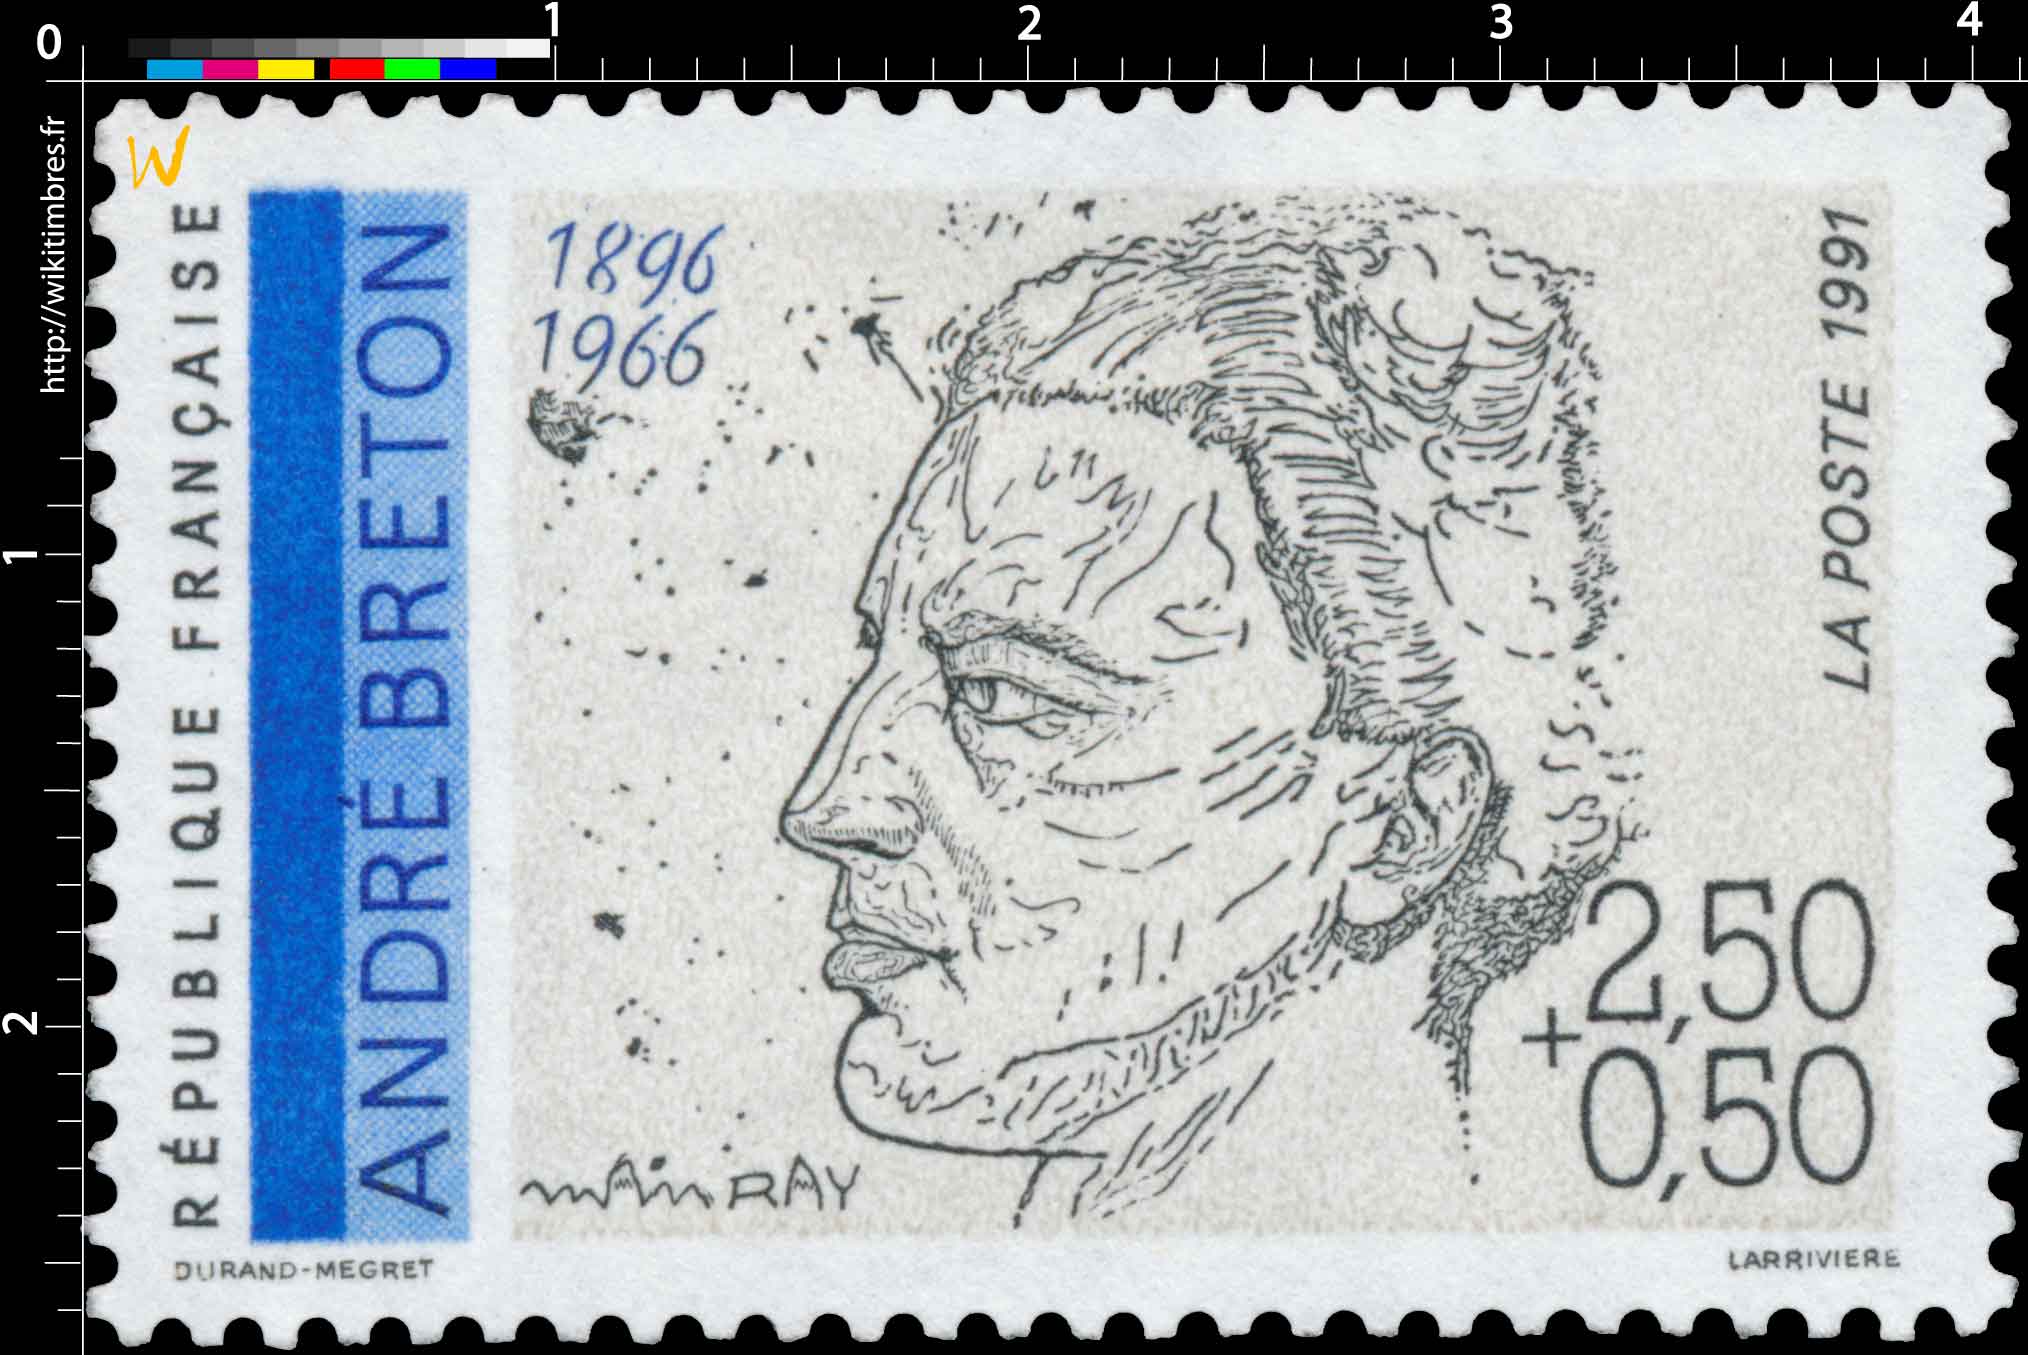 1991 ANDRÉ BRETON 1896-1966